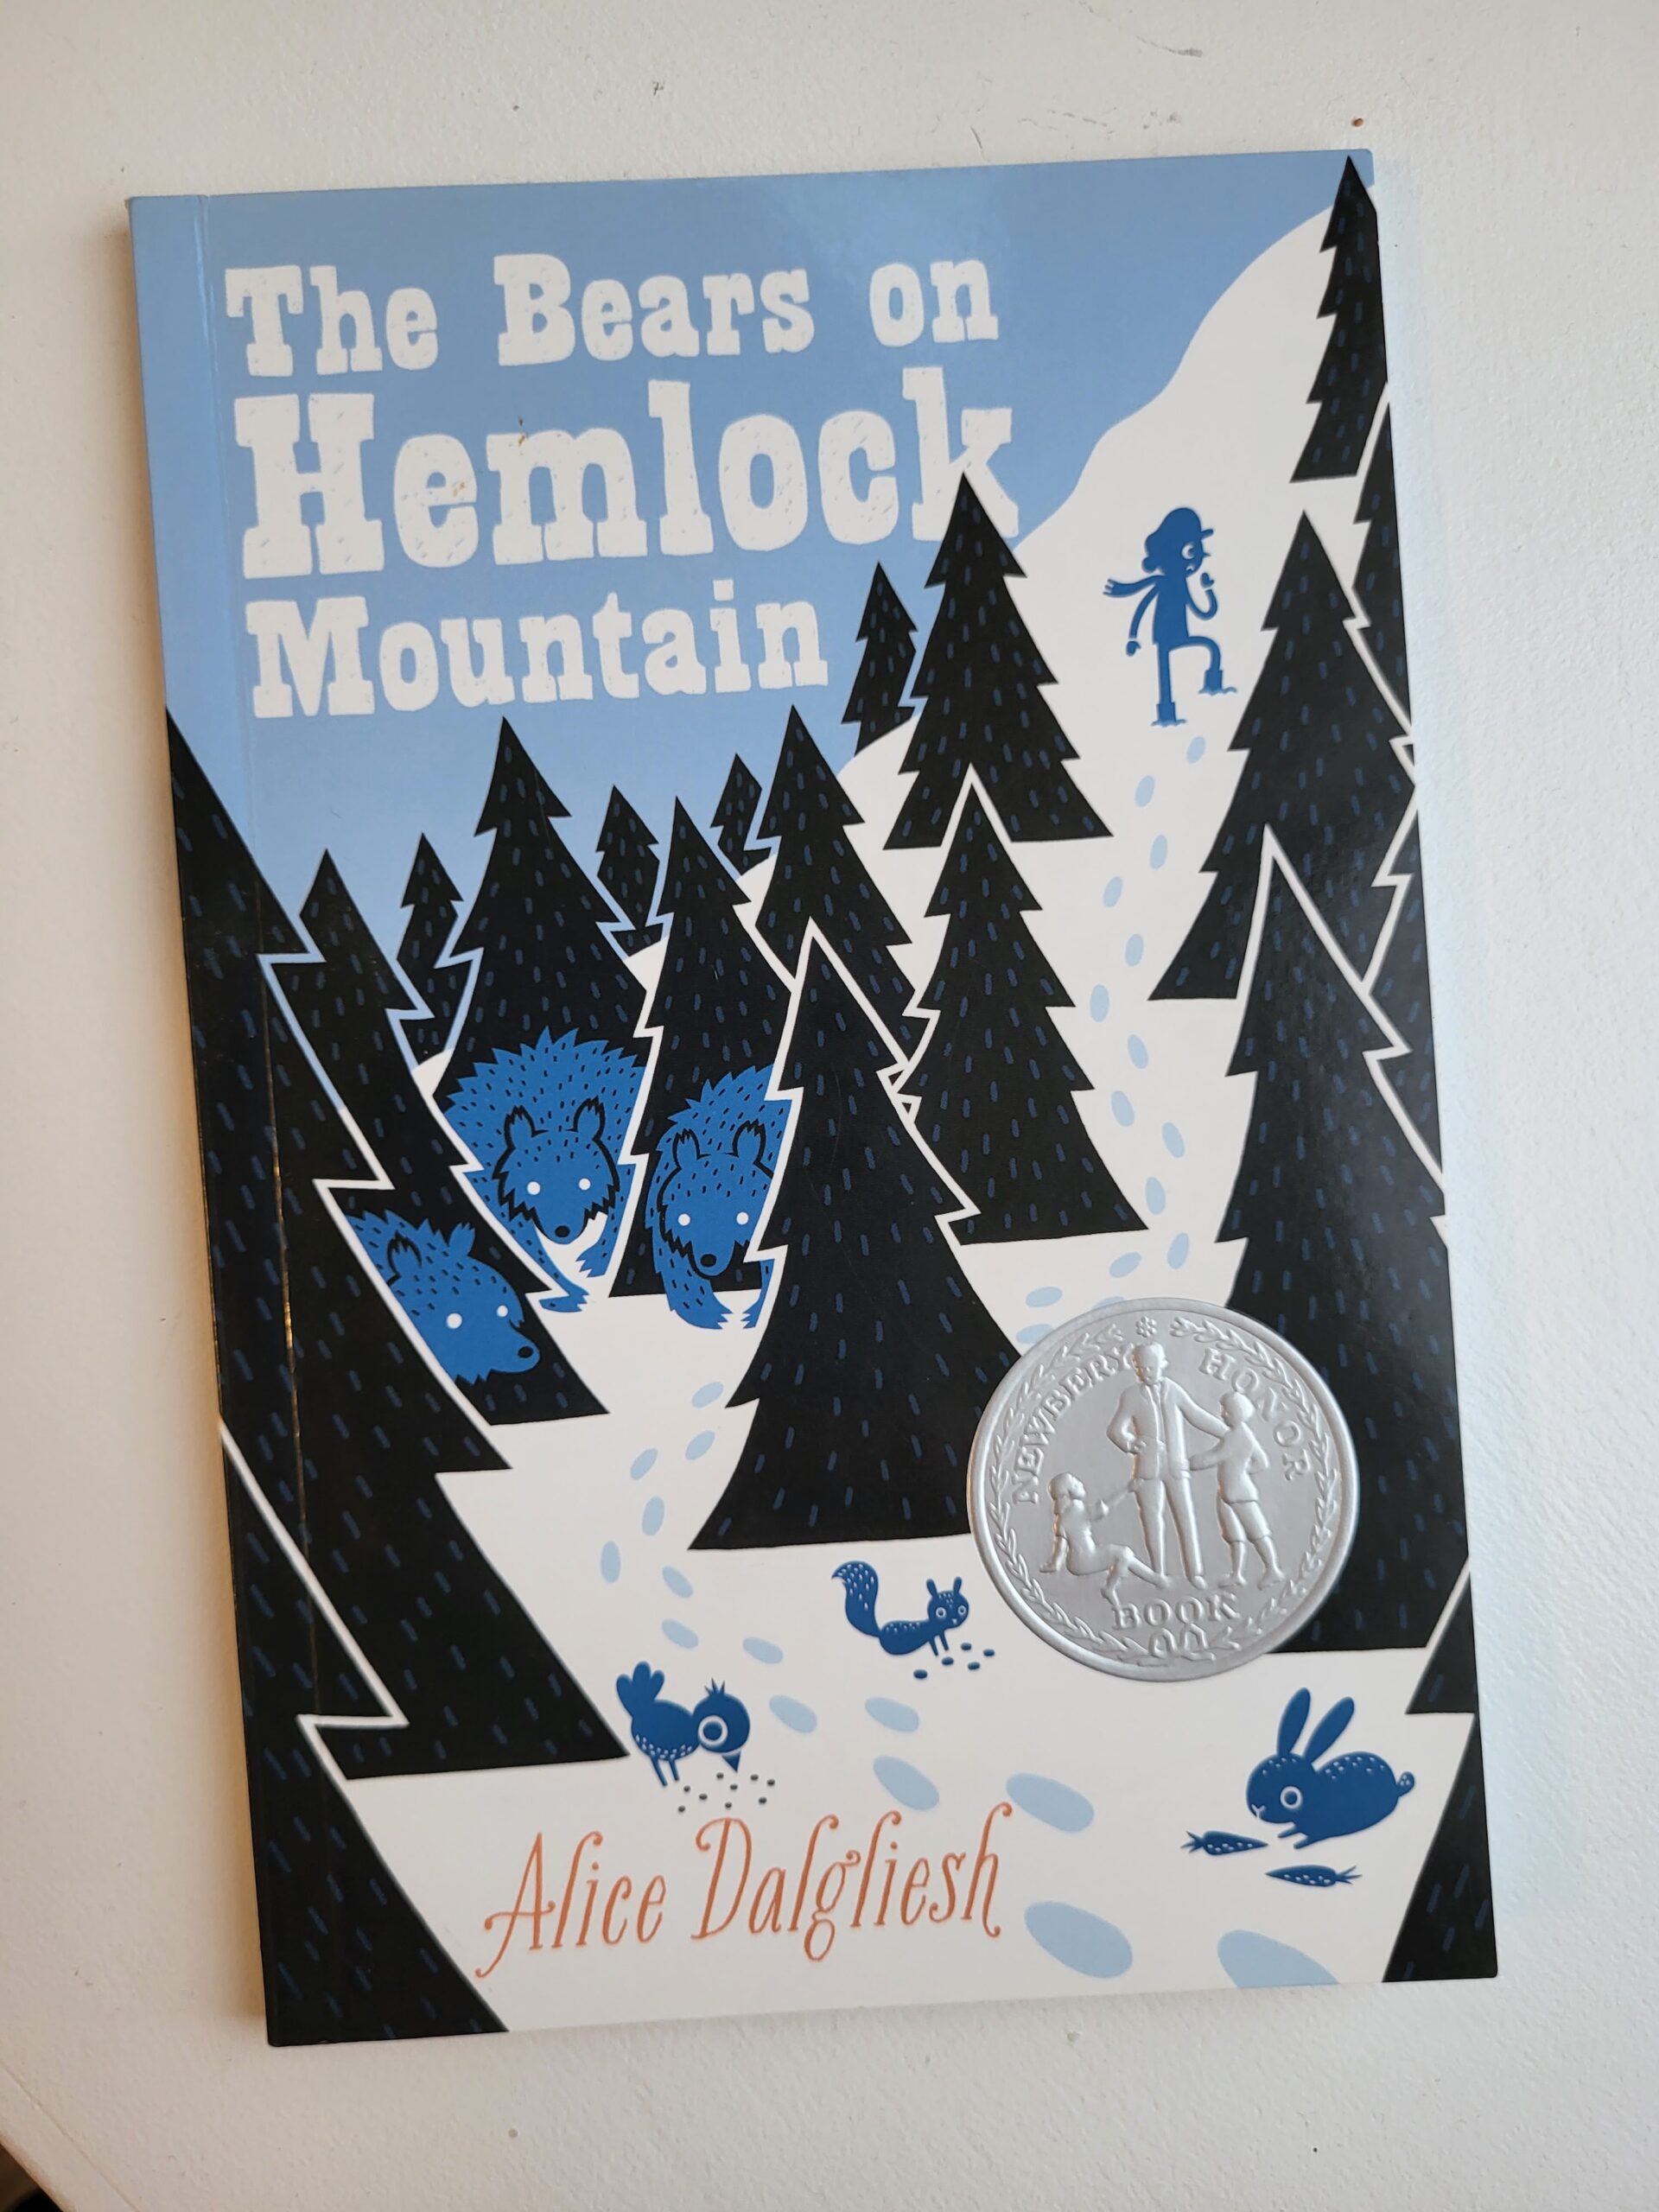 The Bears on Hemlock Mountain book used in The Bears on Hemlock Mountain Chapter Questions.